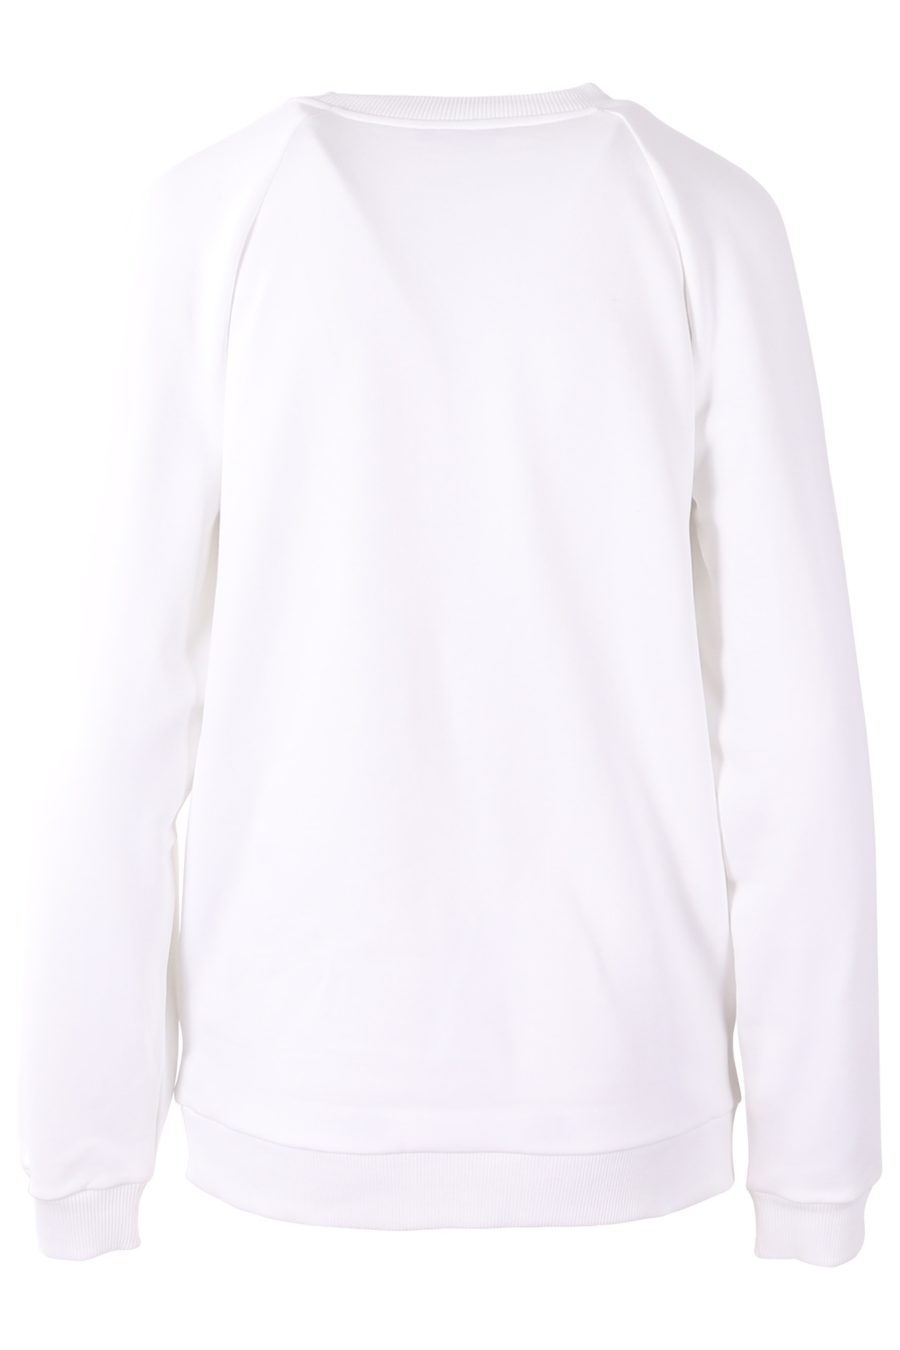 Sweatshirt Balmain white with pink logo print - 79f9c4c59e6af80aa2ab95e20febbaa966f56c70